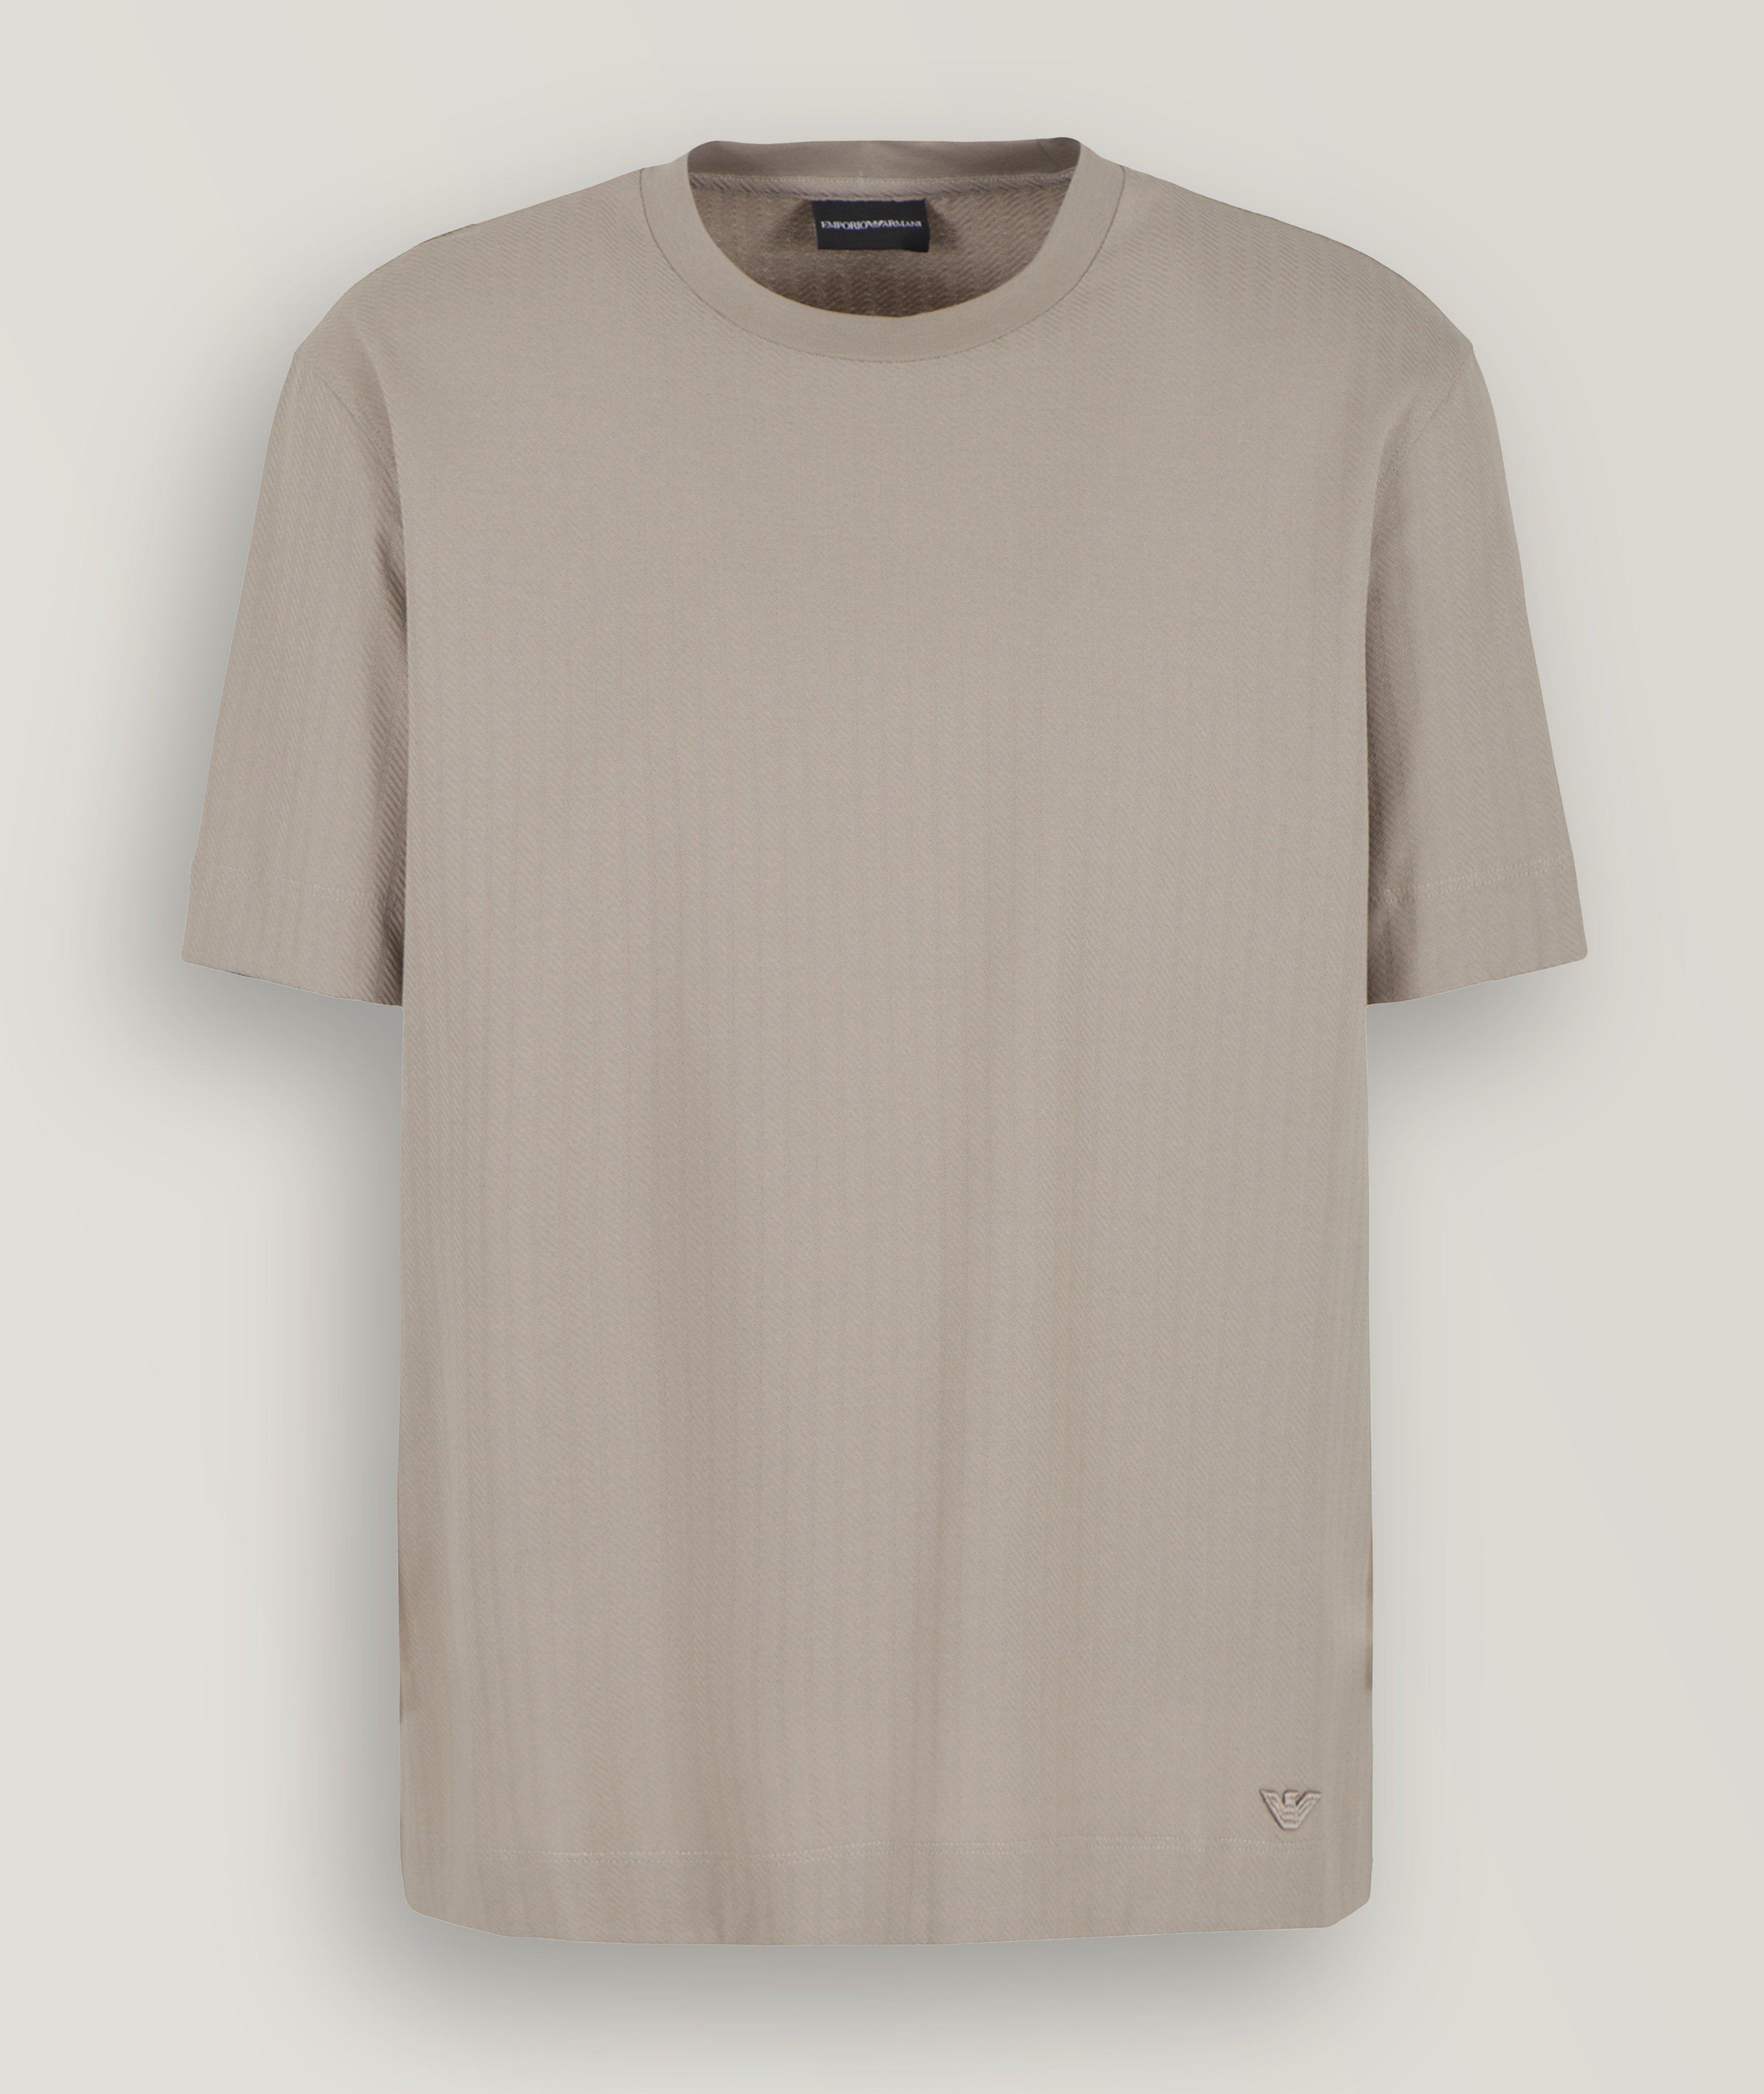 Textured Stitch Cotton T-Shirt image 0